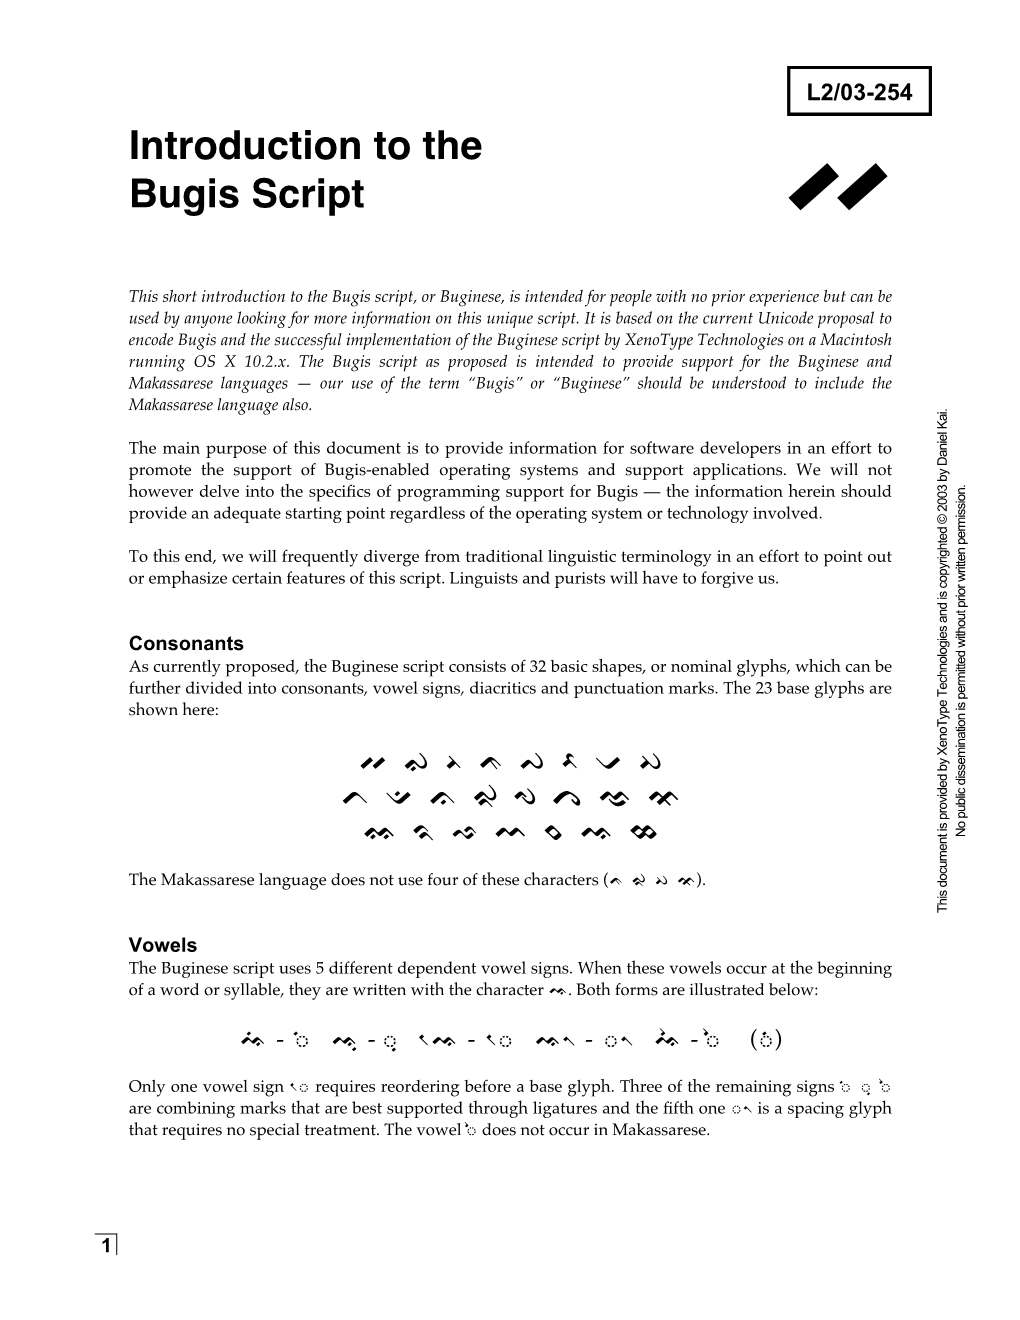 Introduction to the Bugis Script 